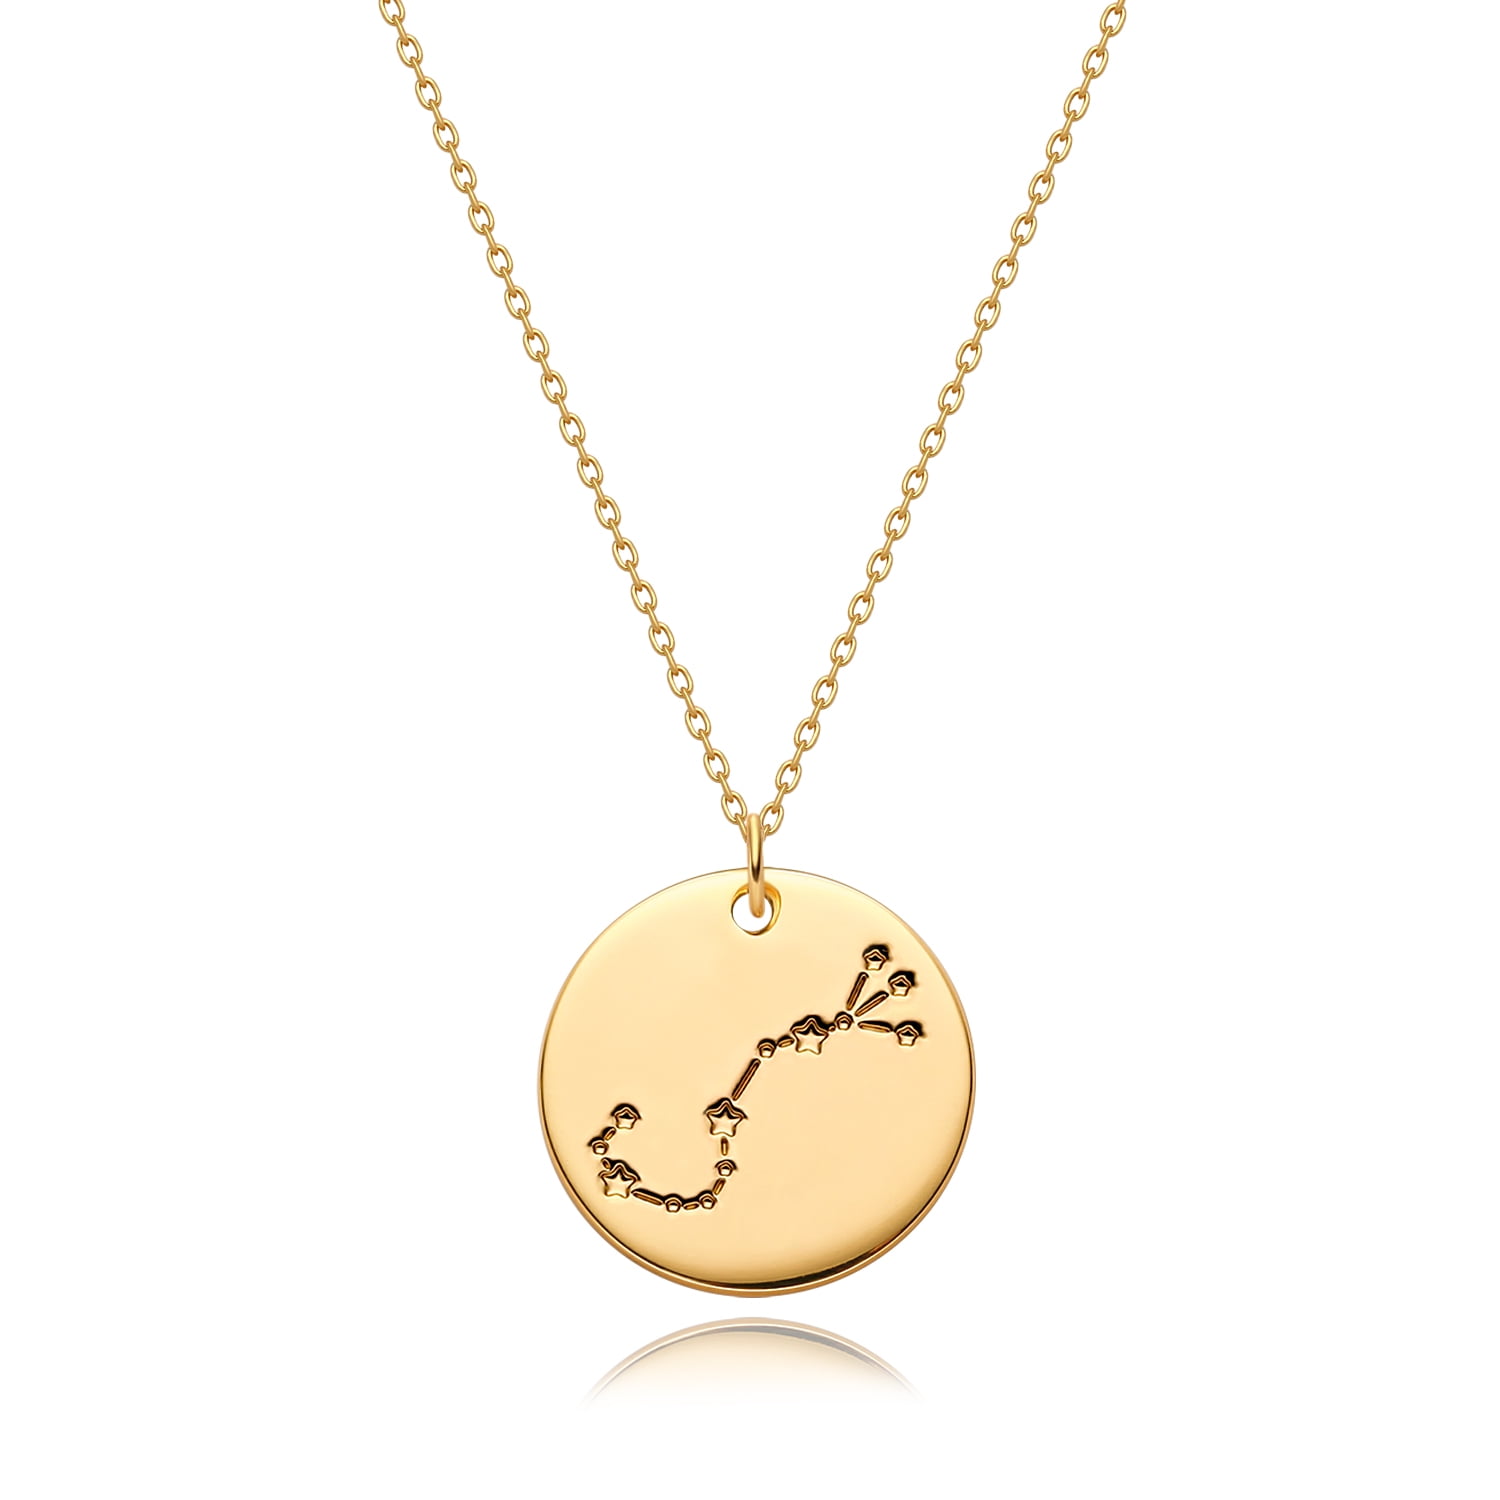 Details about   Taurus Necklace Taurus Sign Zodiac Pendant Horoscope Jewellery Taurus Jewelry 